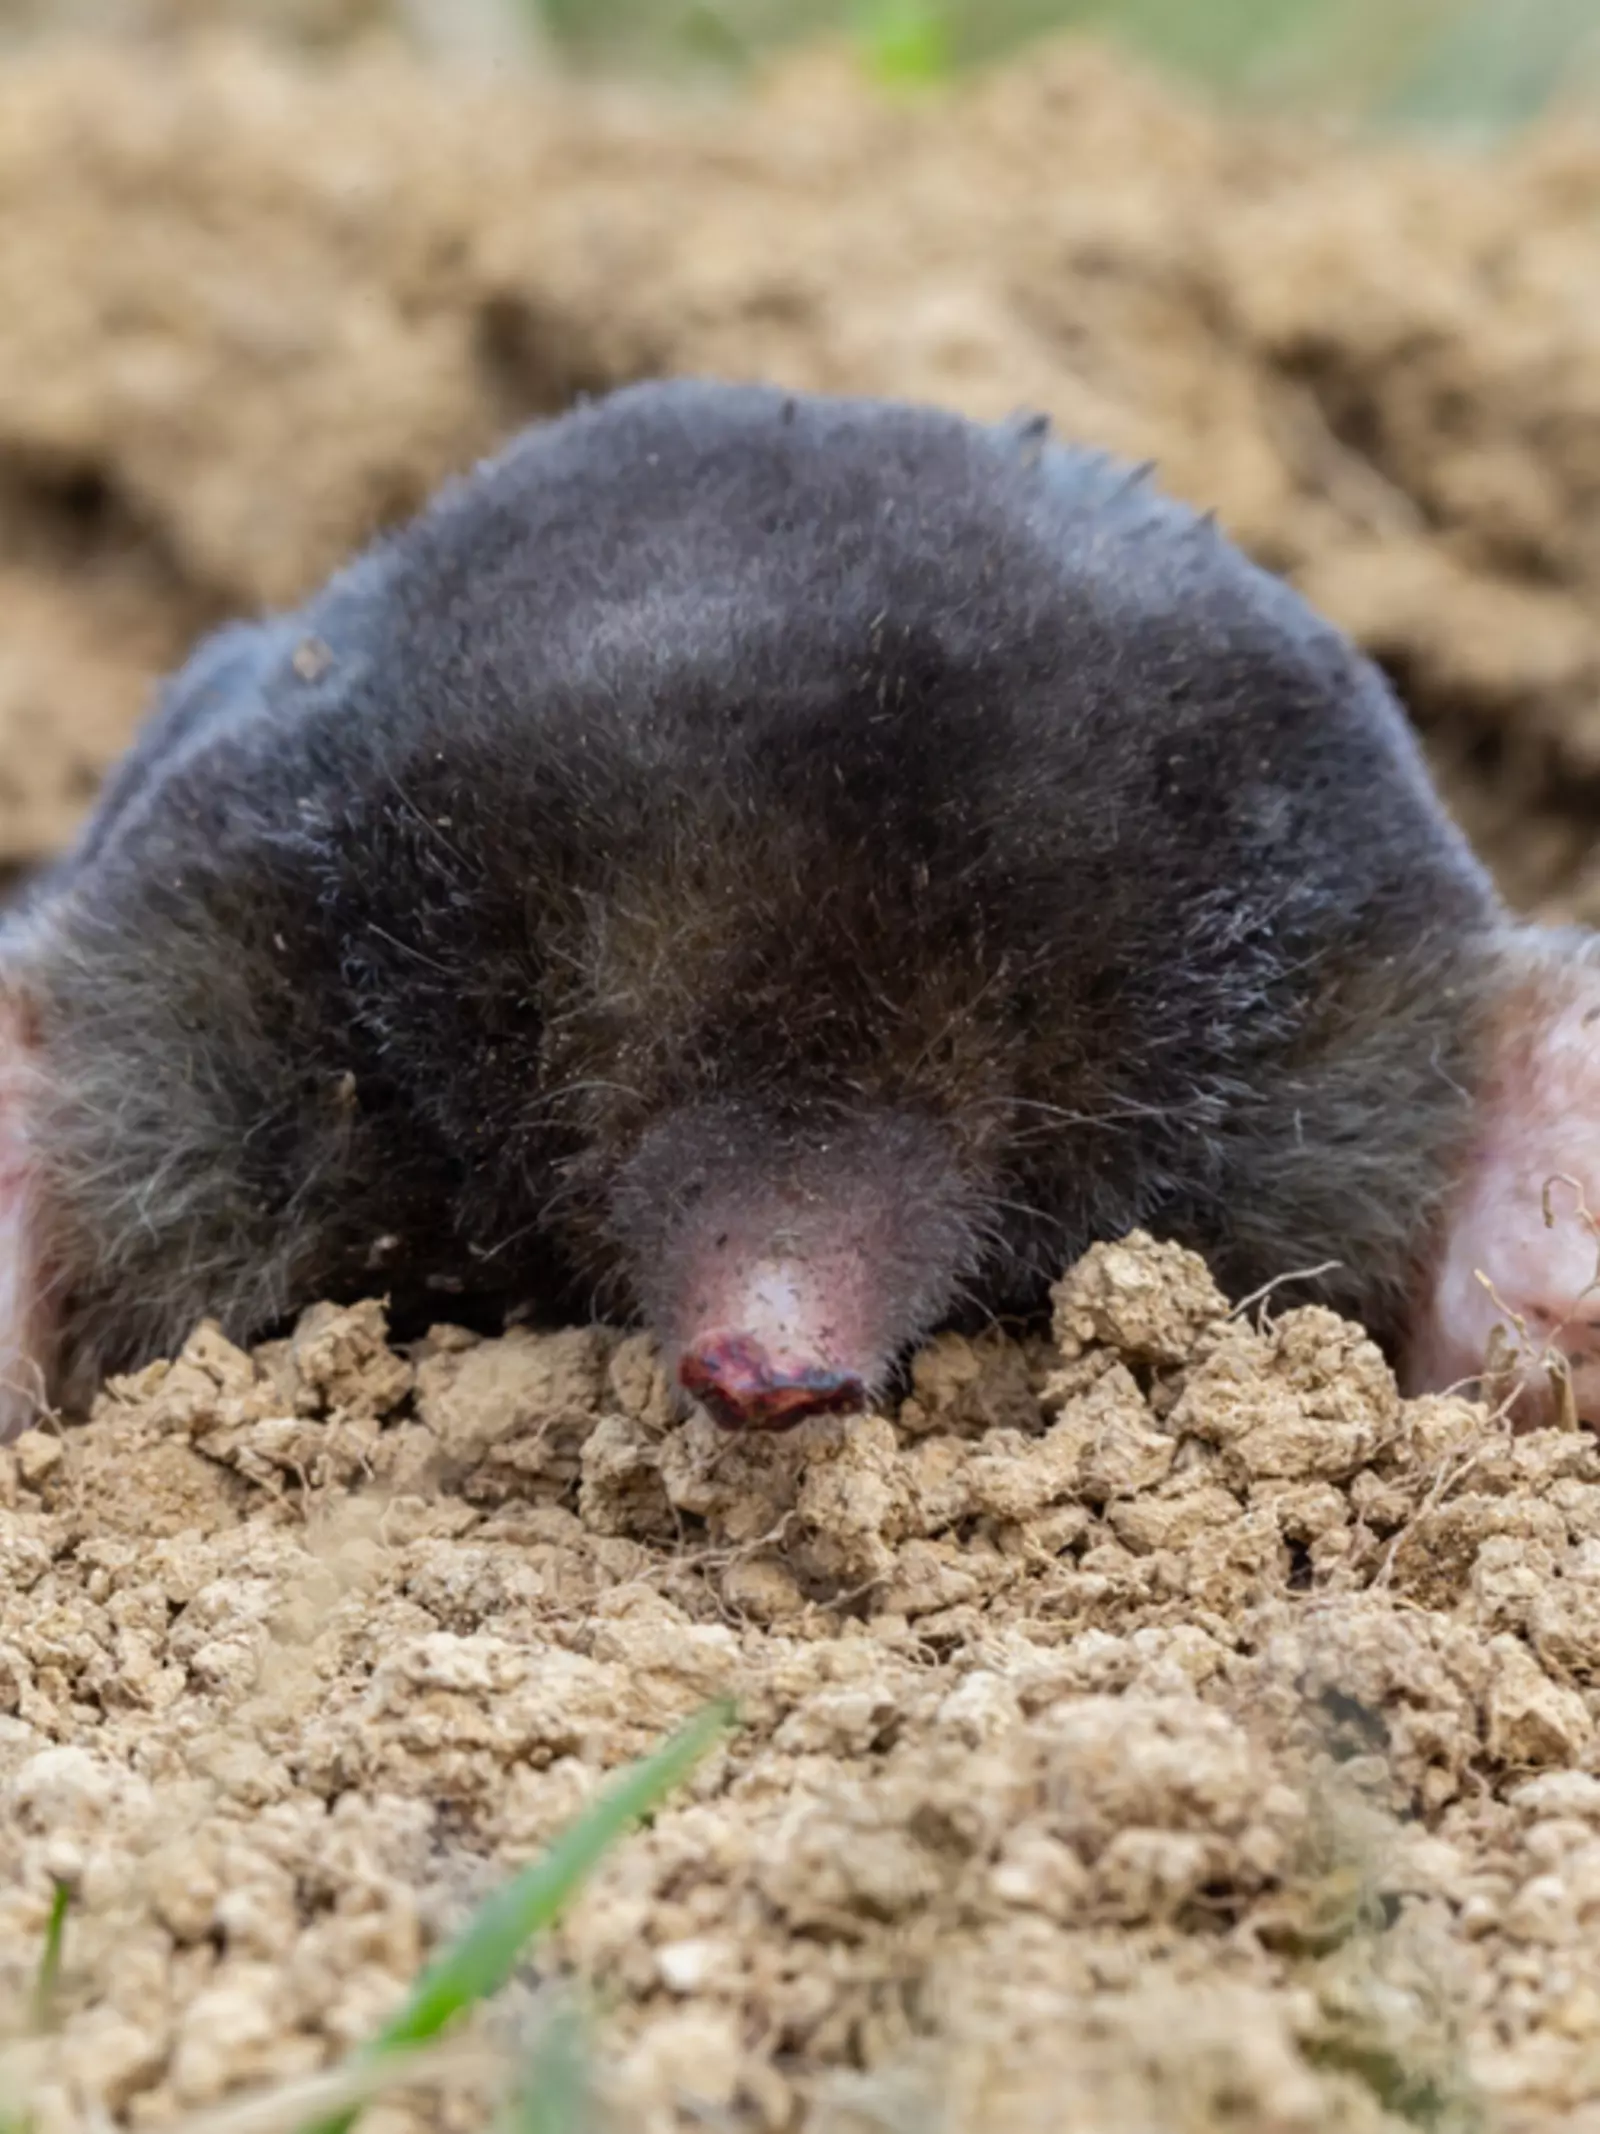 Mole in daylight above ground